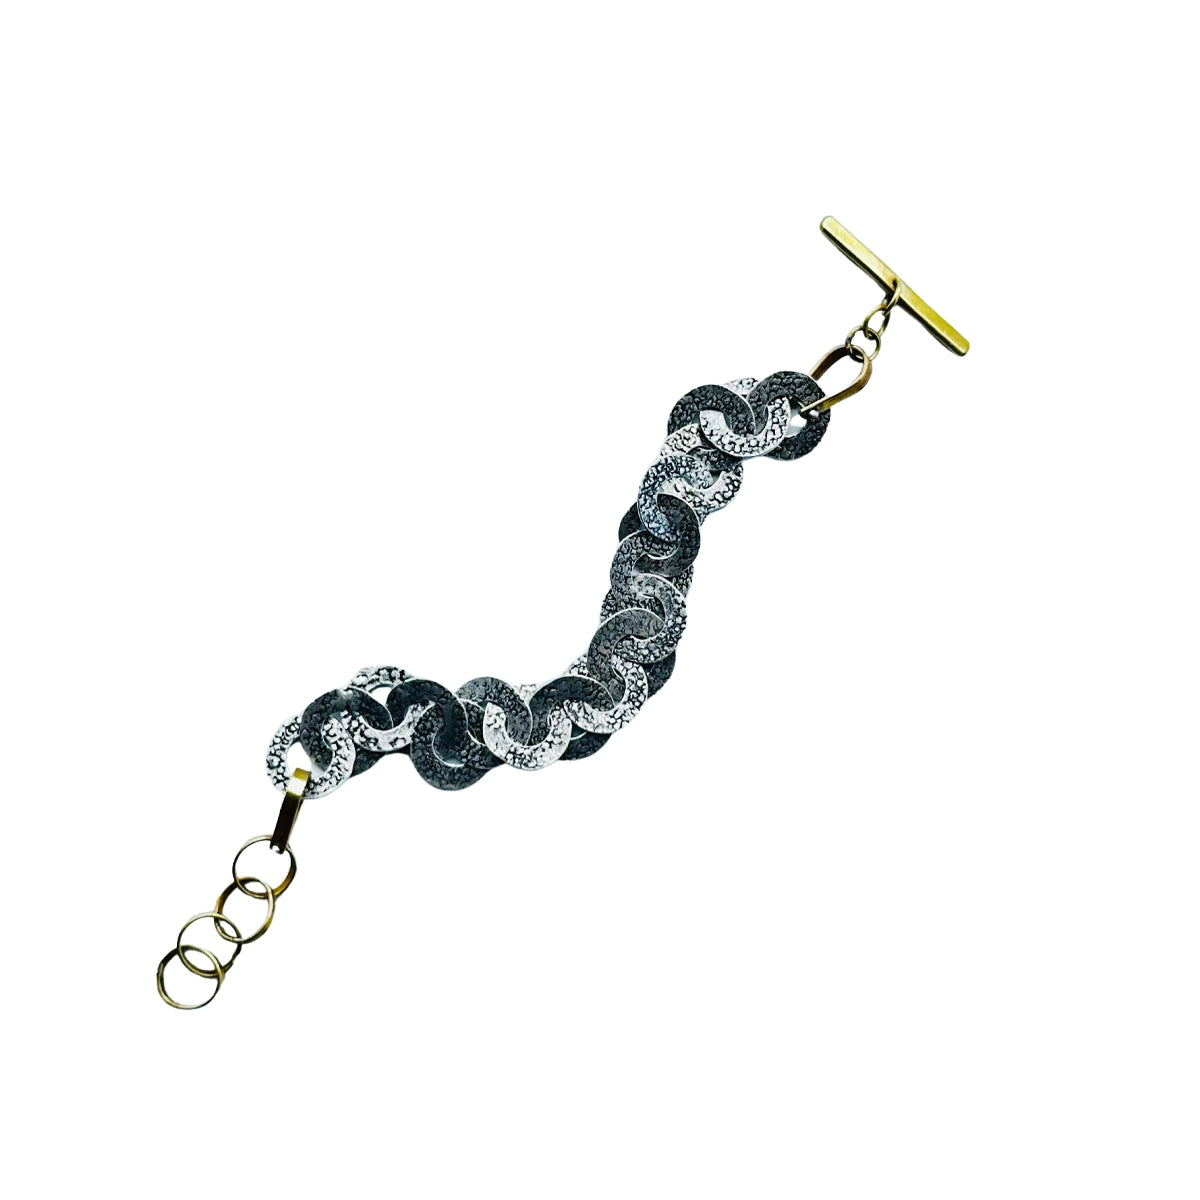 Hammered Texture Chain Bracelet